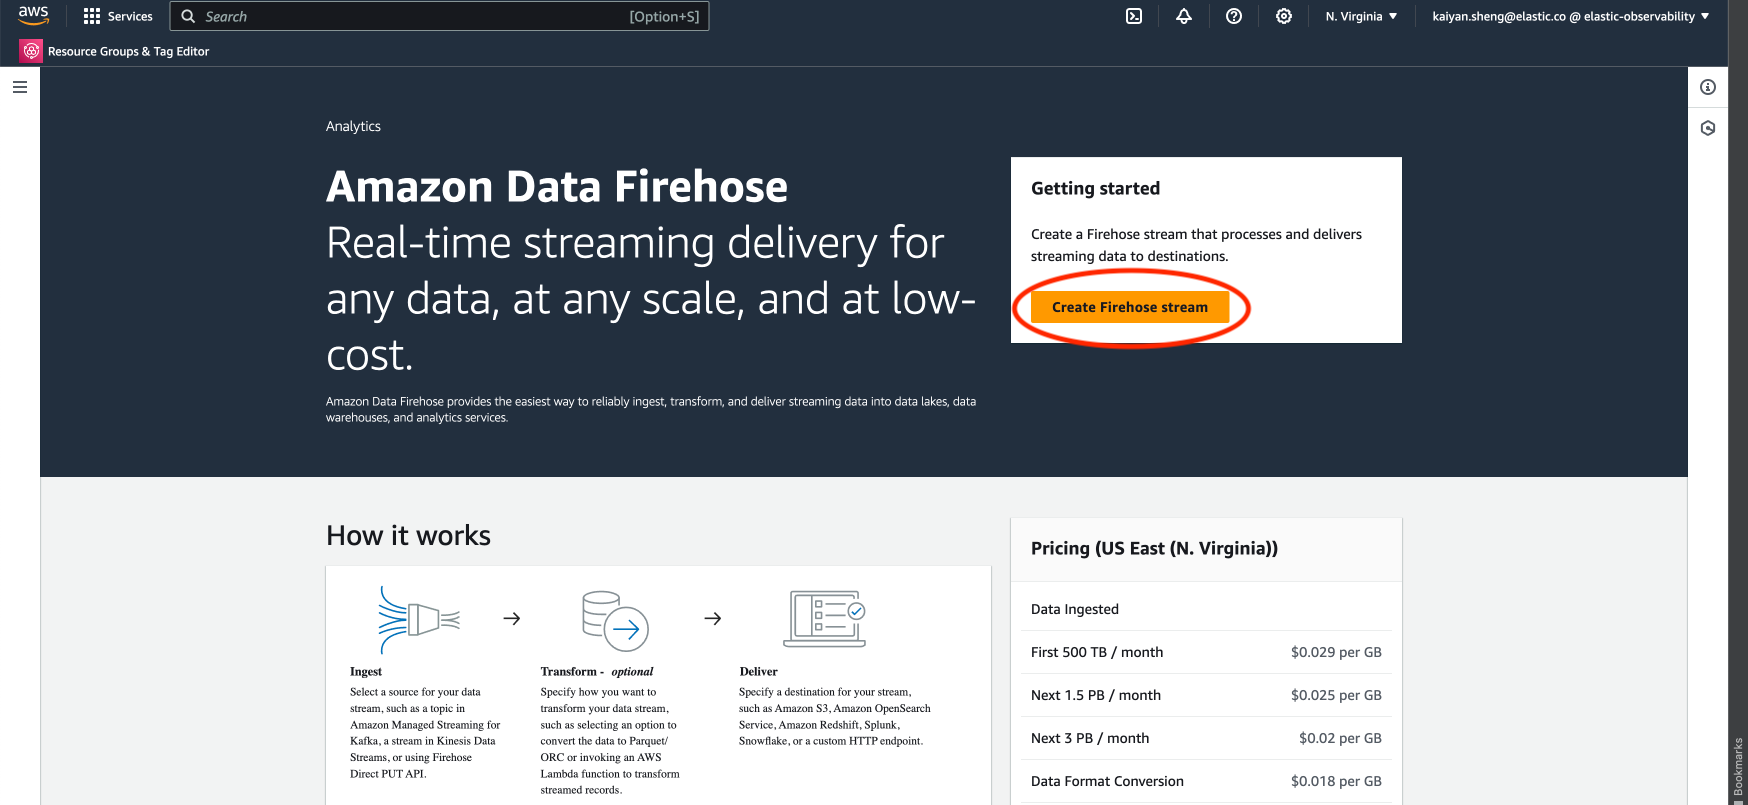 Amazon Kinesis Data Firehose